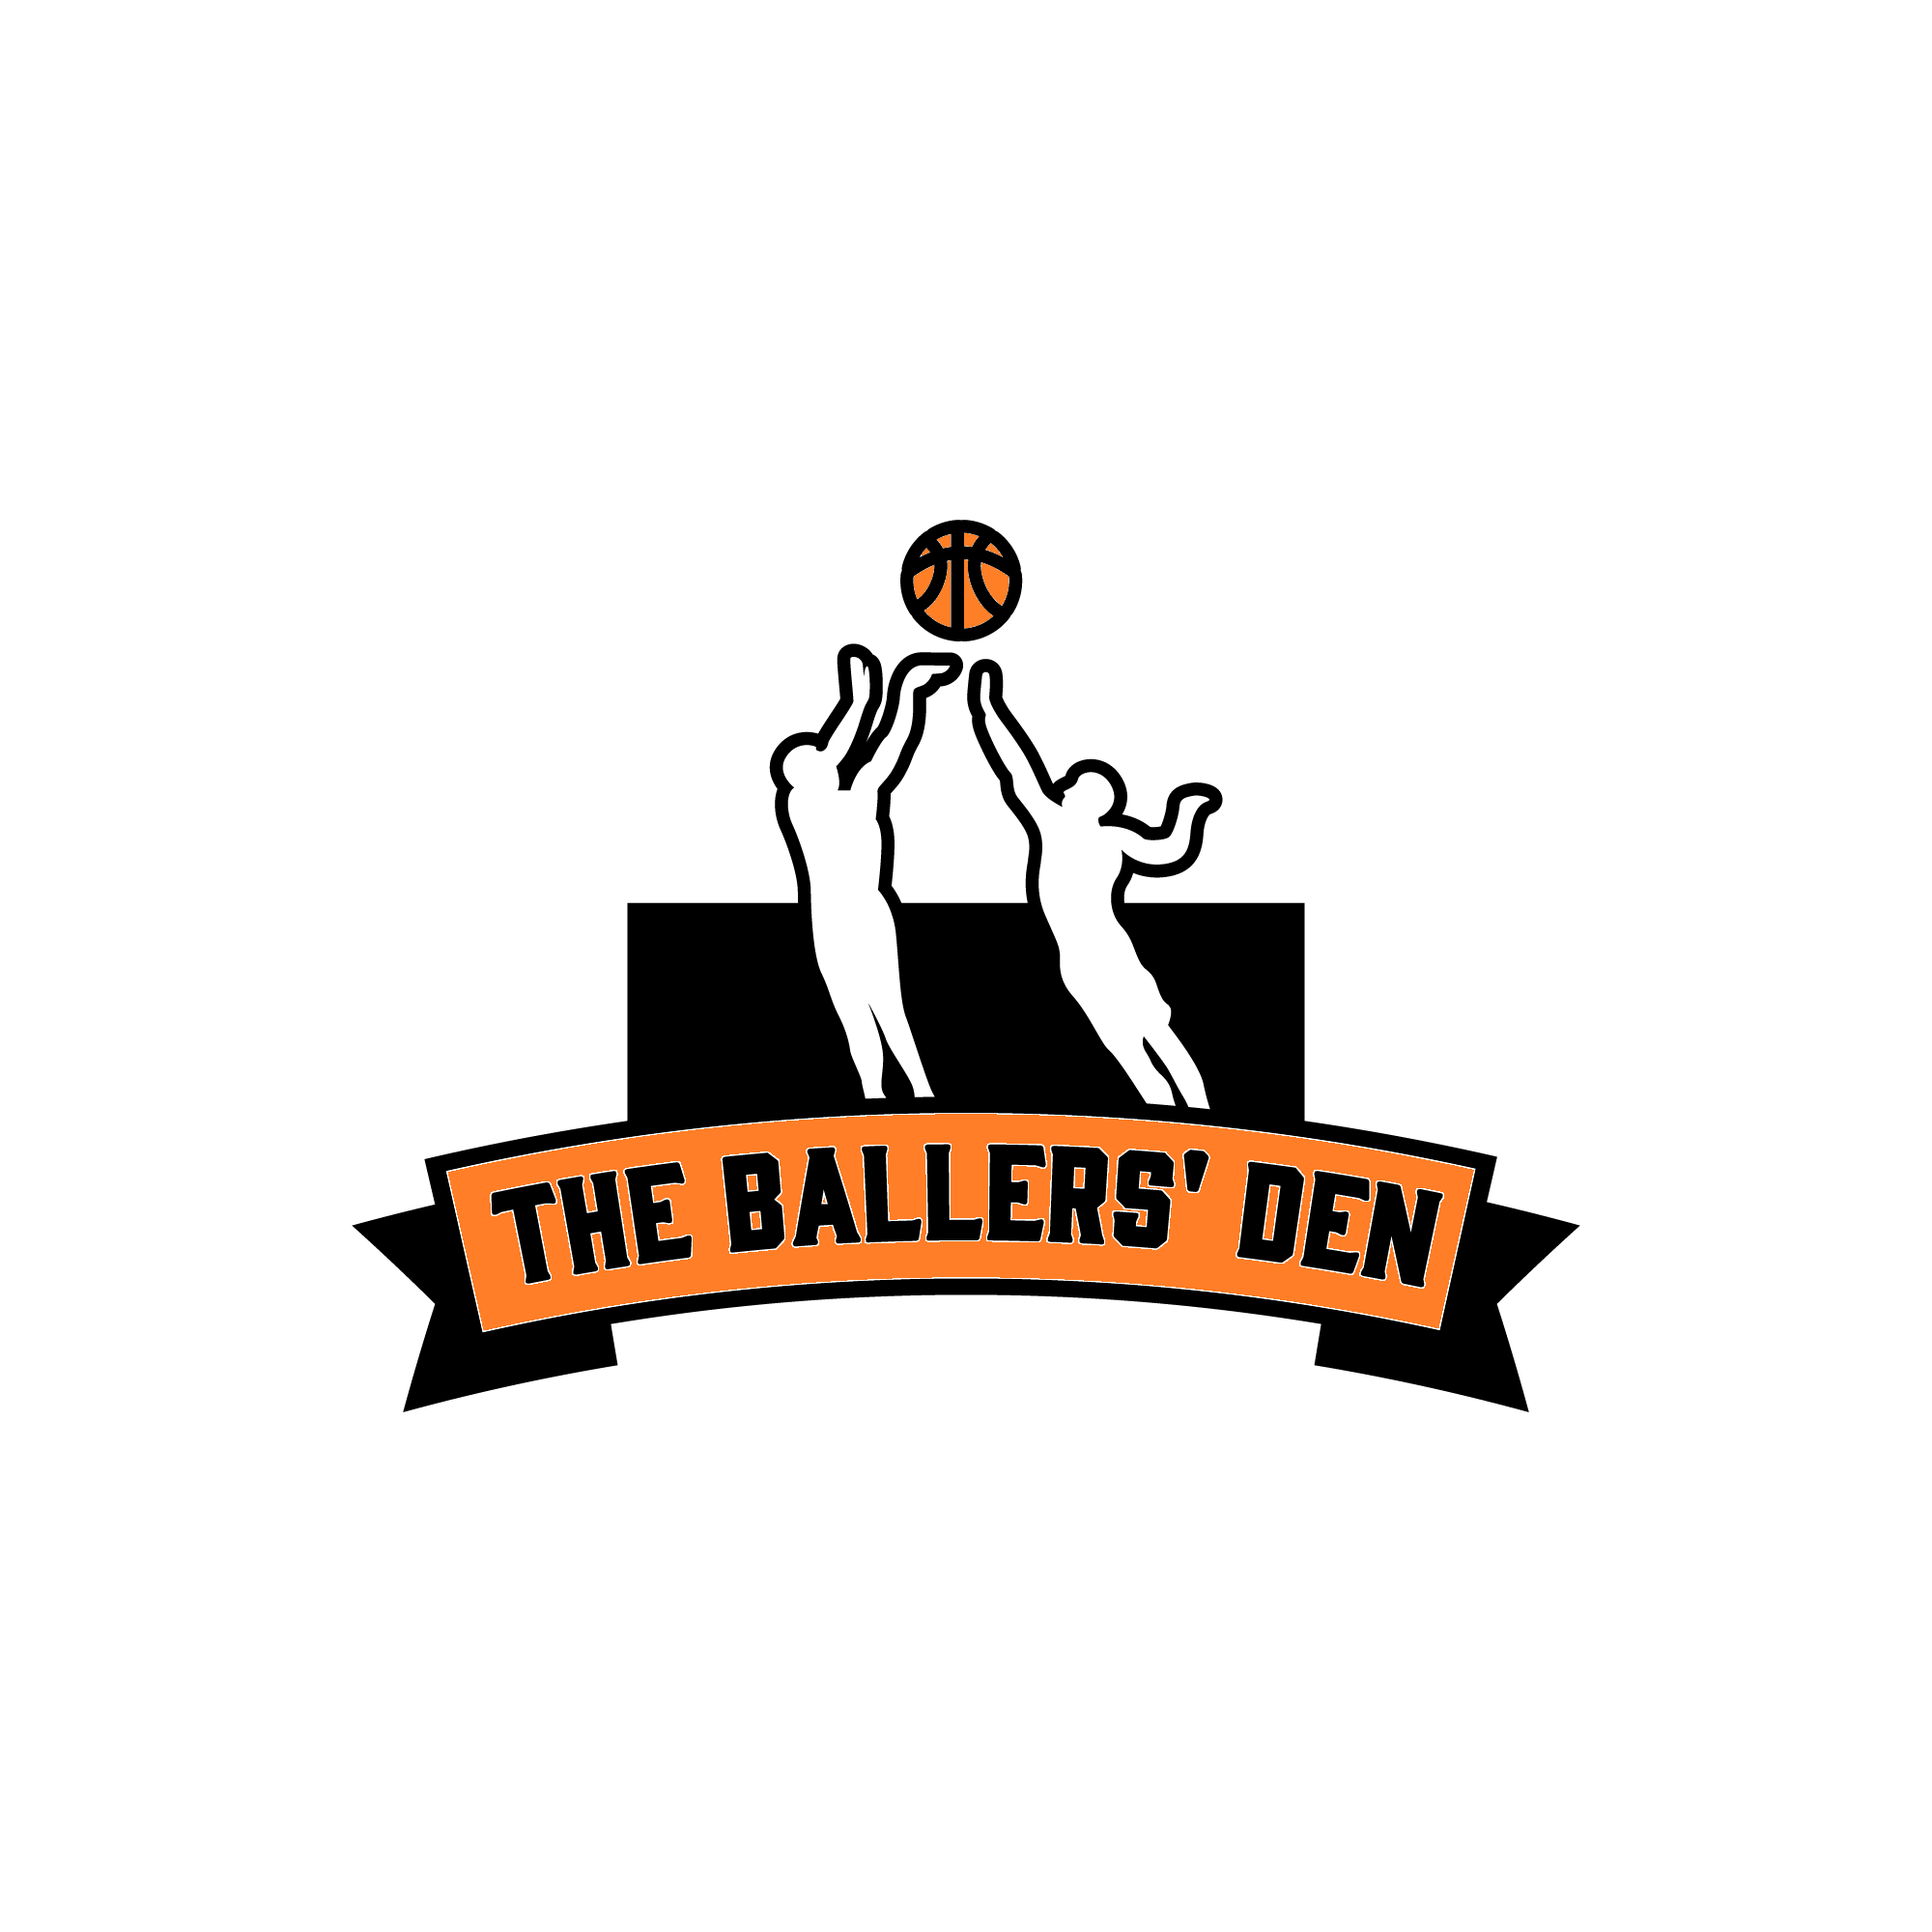 Ballers' Den Basketball League